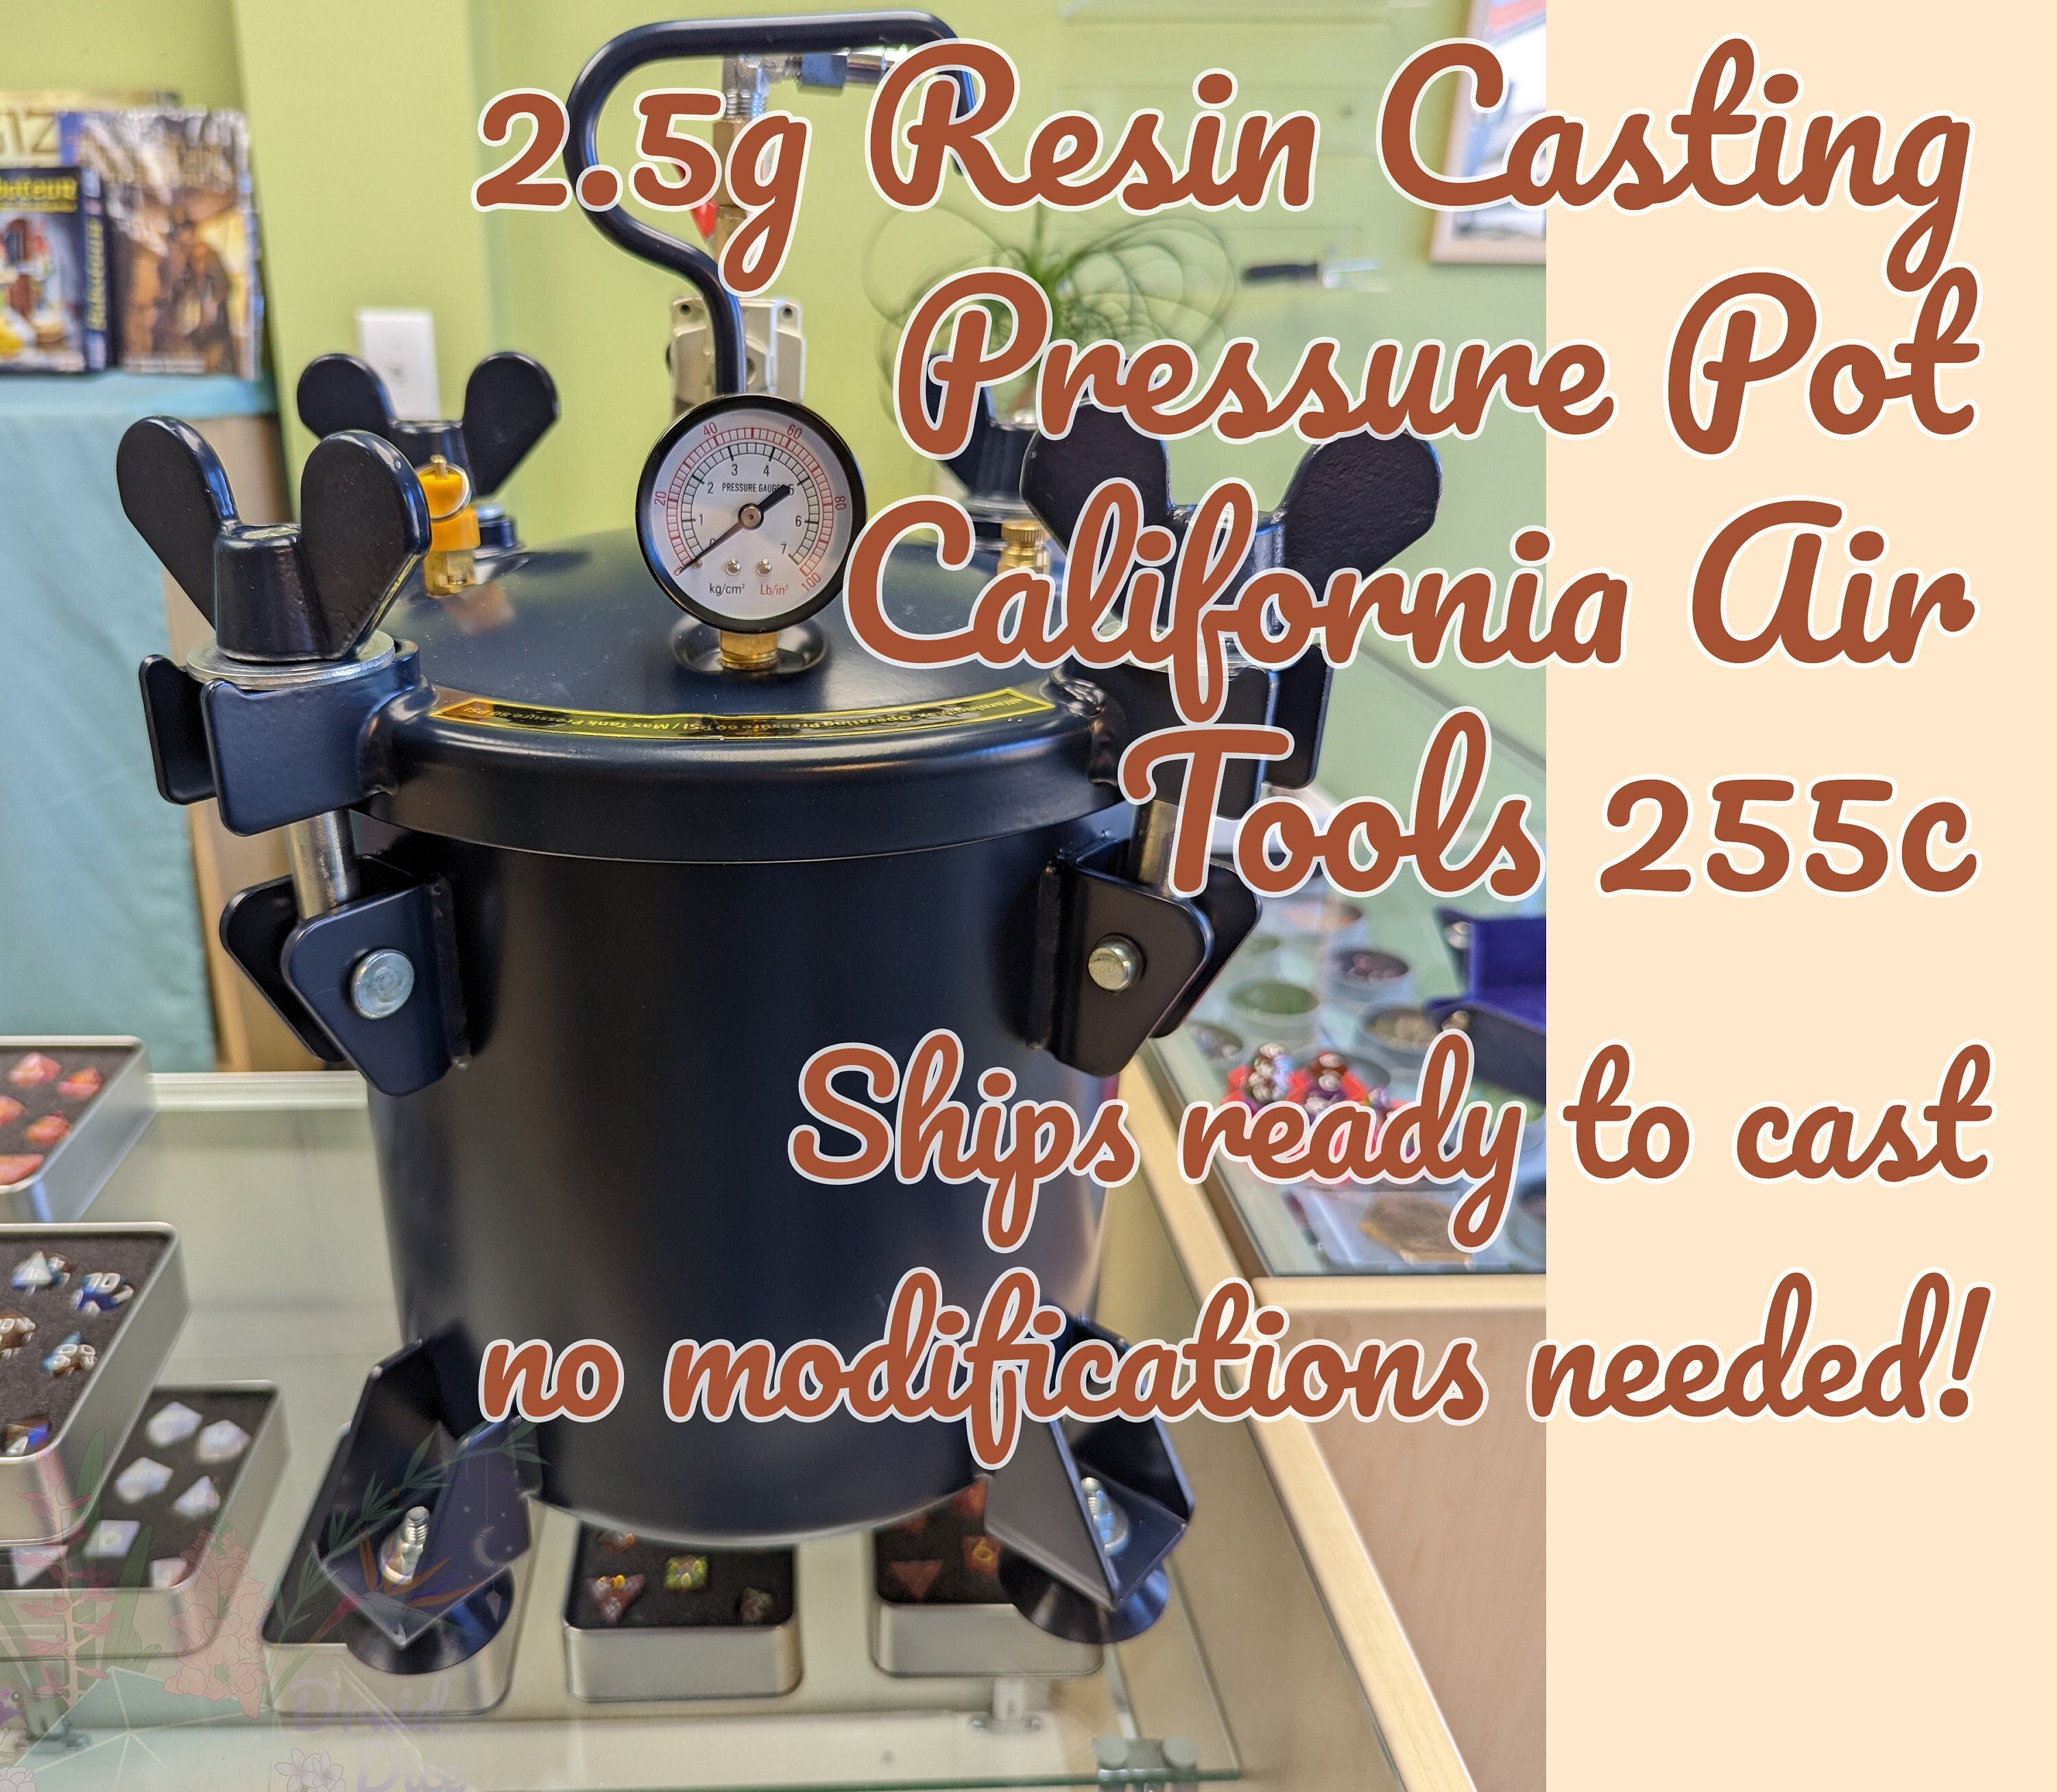 California Air Tools Pressure Pots - Designed for Casting